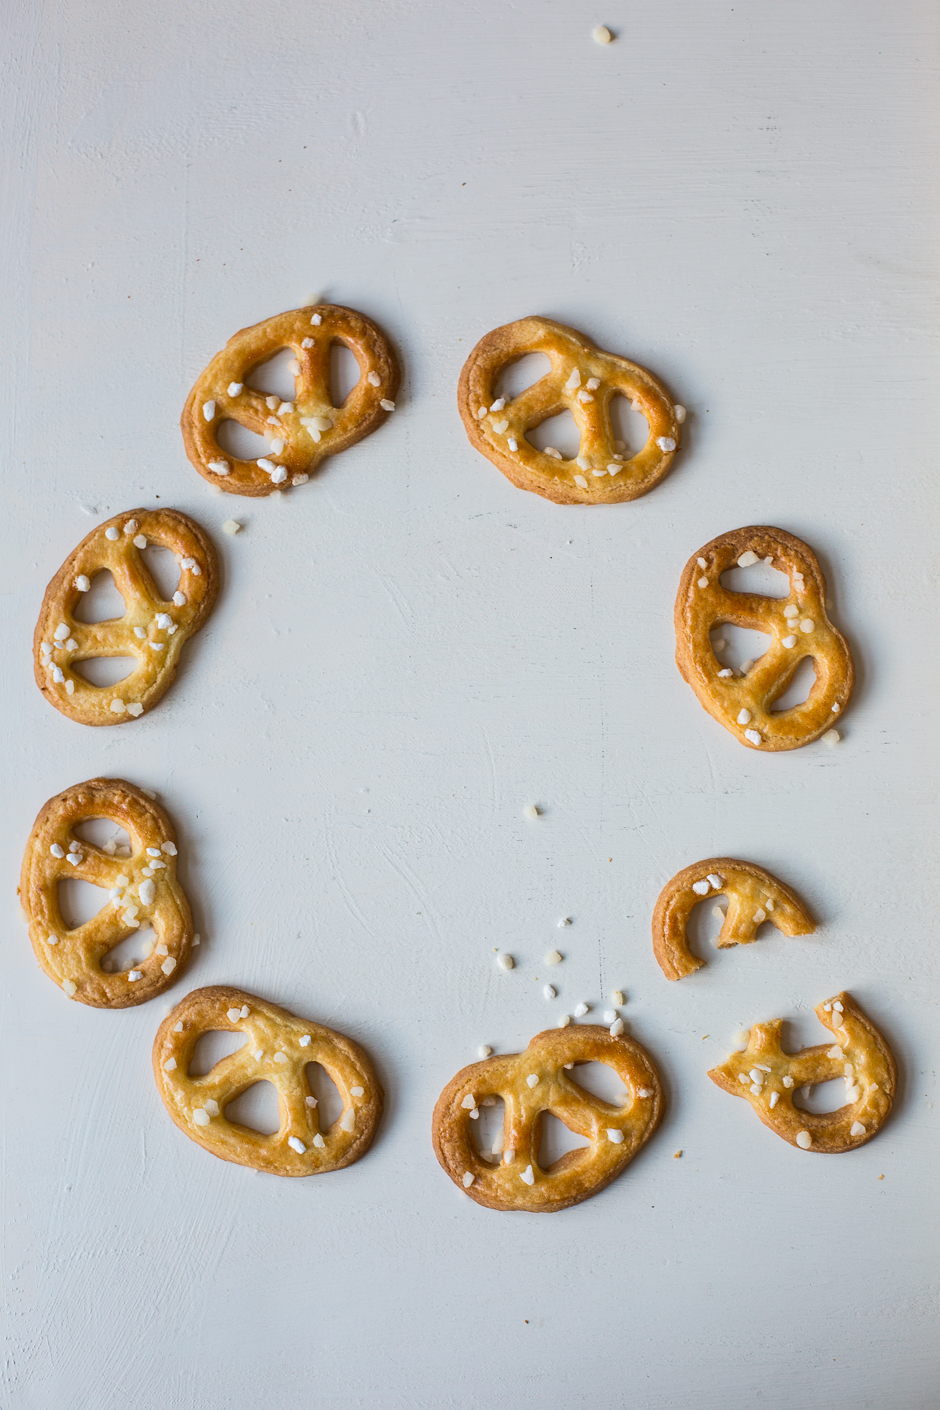 sweet pretzels from the Taste of Memories country kitchen www.tasteofmemories.com